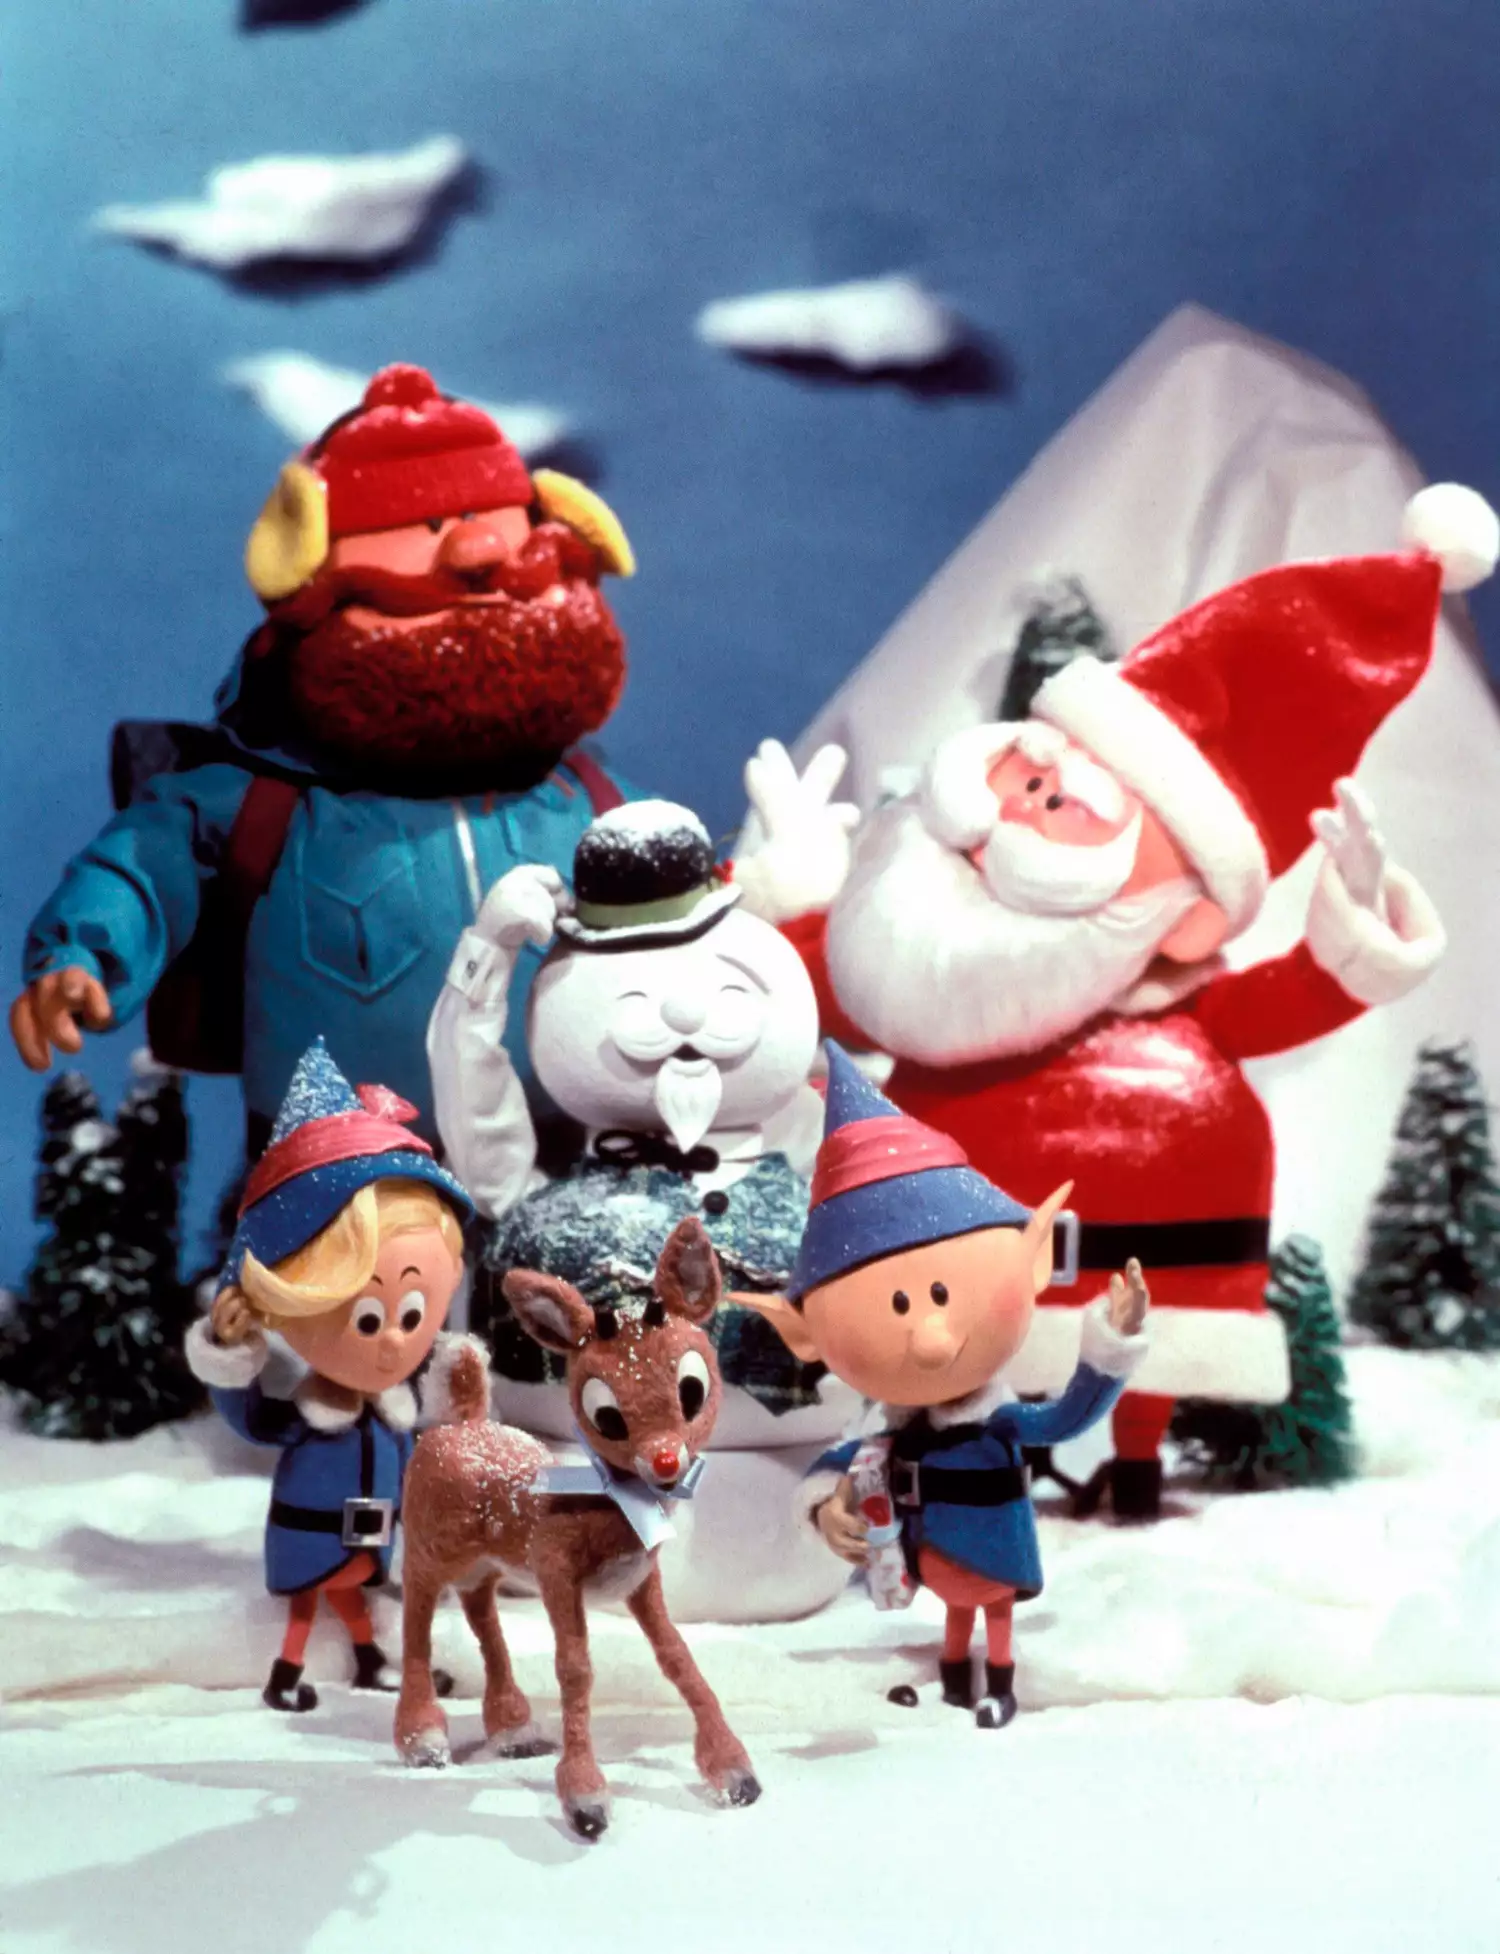 Front Row: Hermey, Rudolph, Head Elf, Yukon Cornelius, Sam the Snowman, Santa Claus